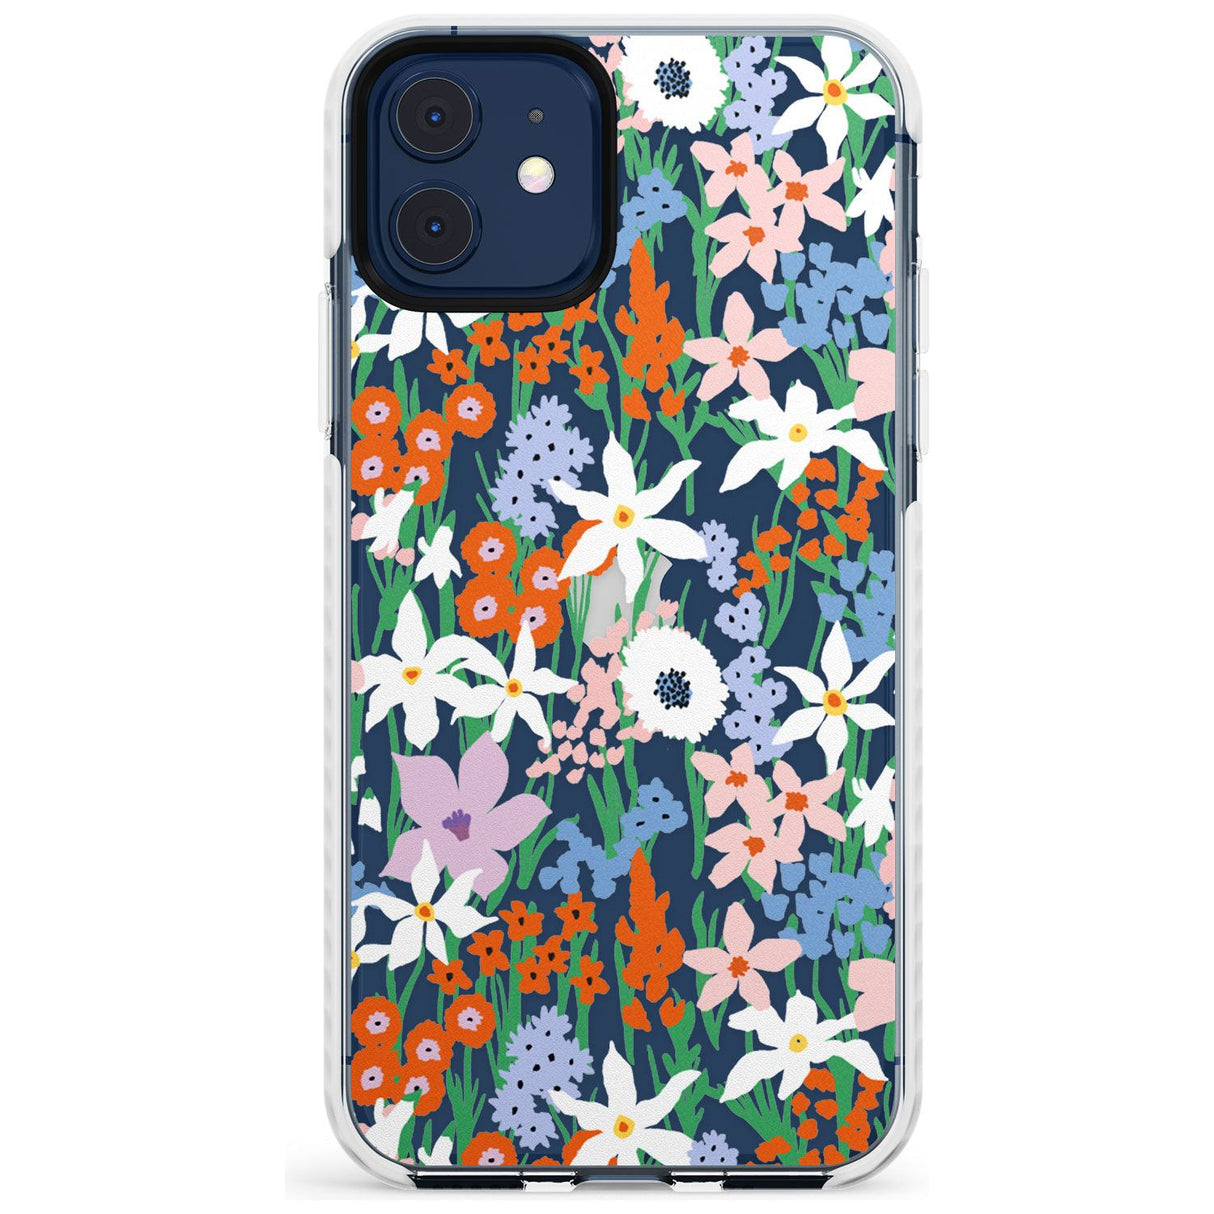 Springtime Meadow: Transparent Slim TPU Phone Case for iPhone 11